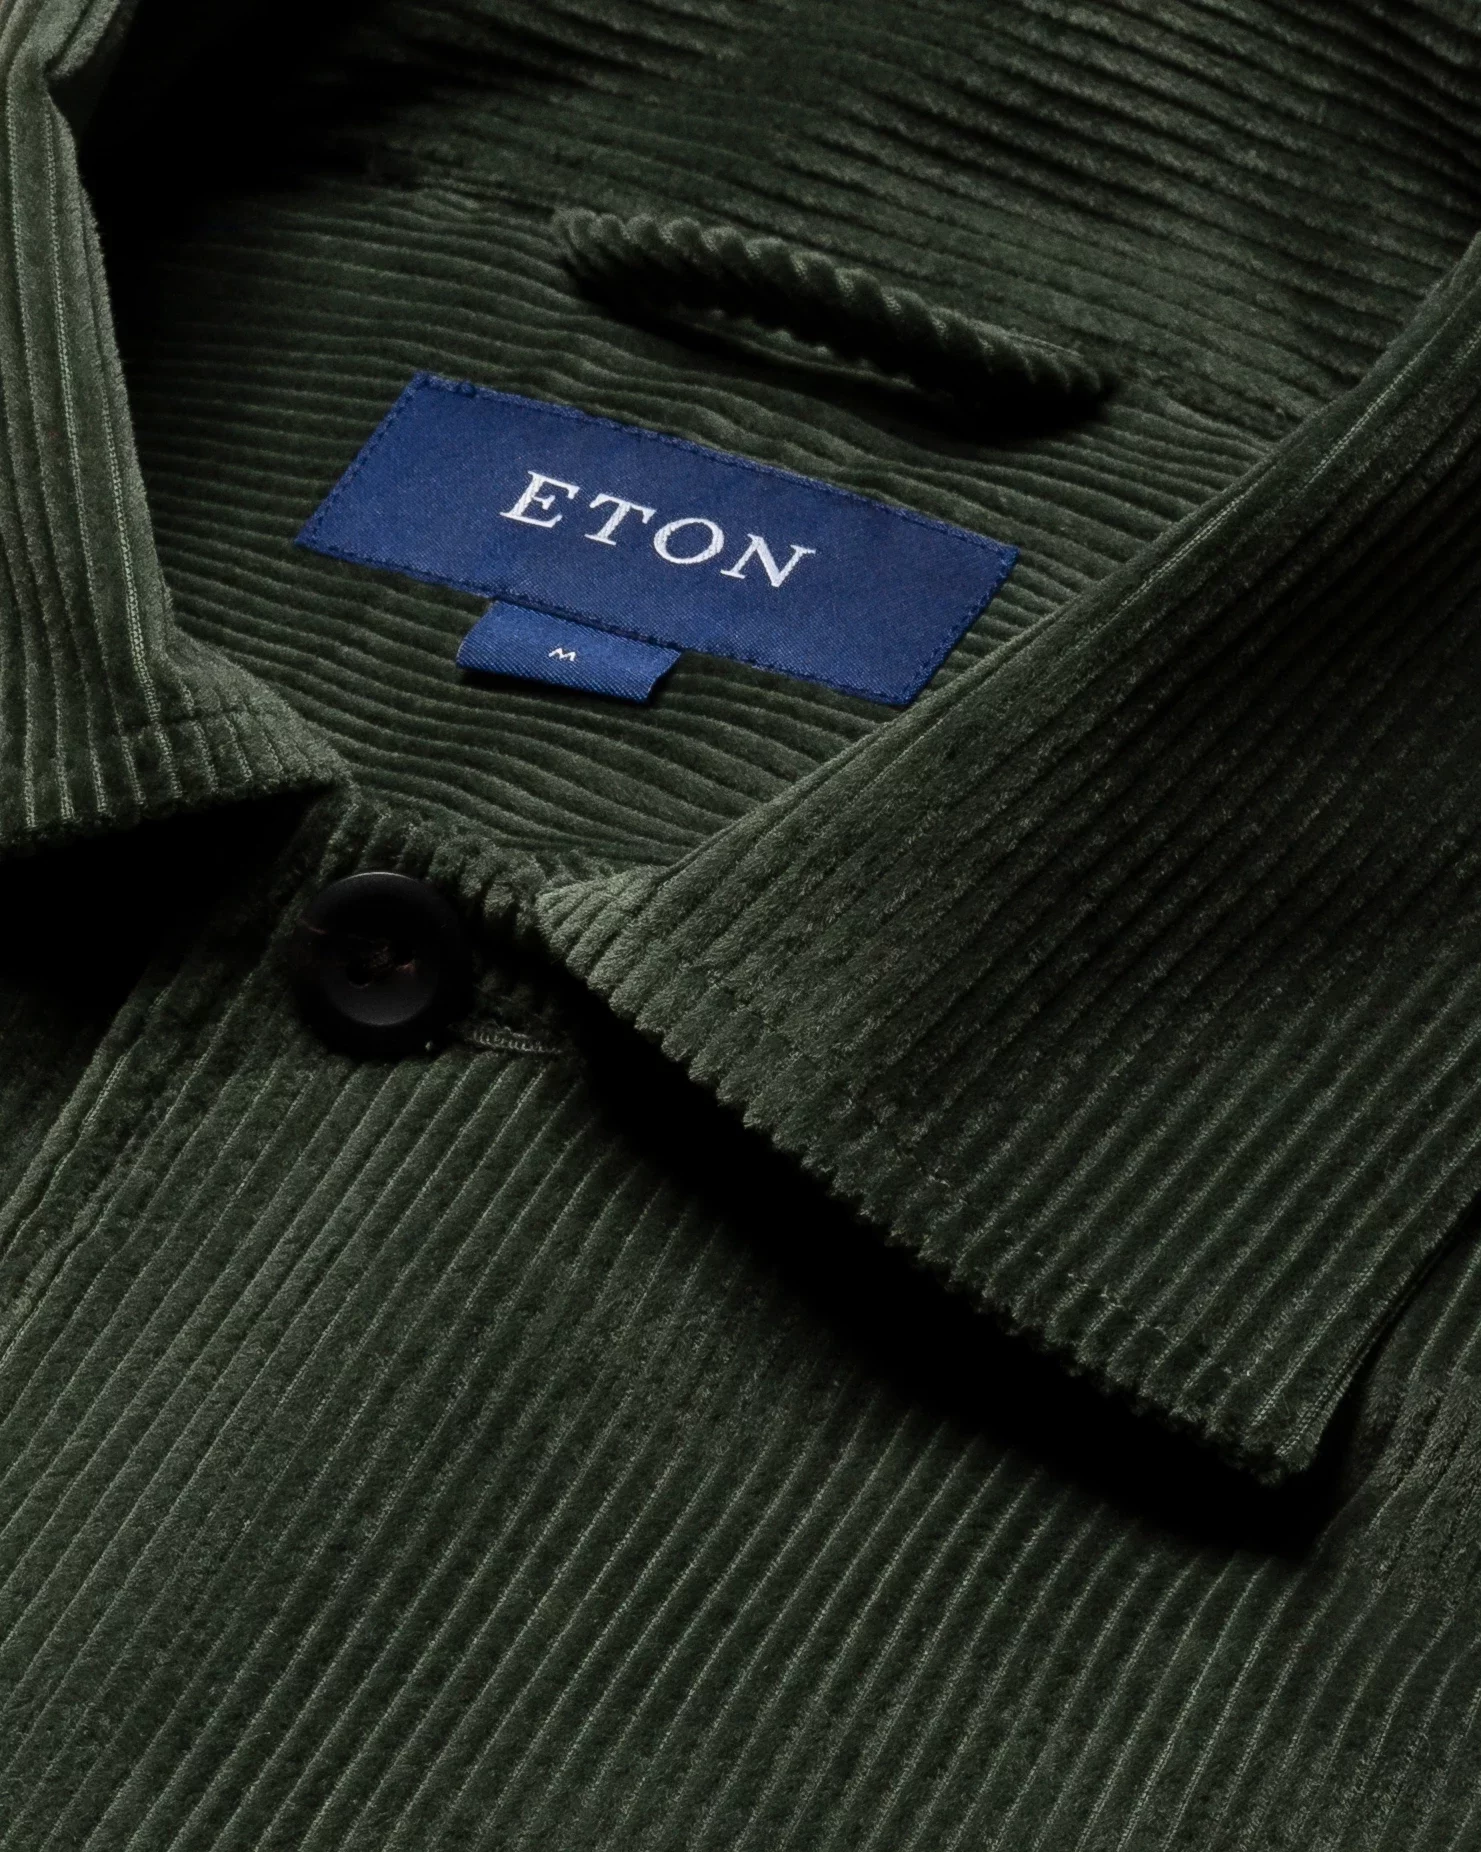 Eton - green corduroy overshirt turn down straight sleeve end regular